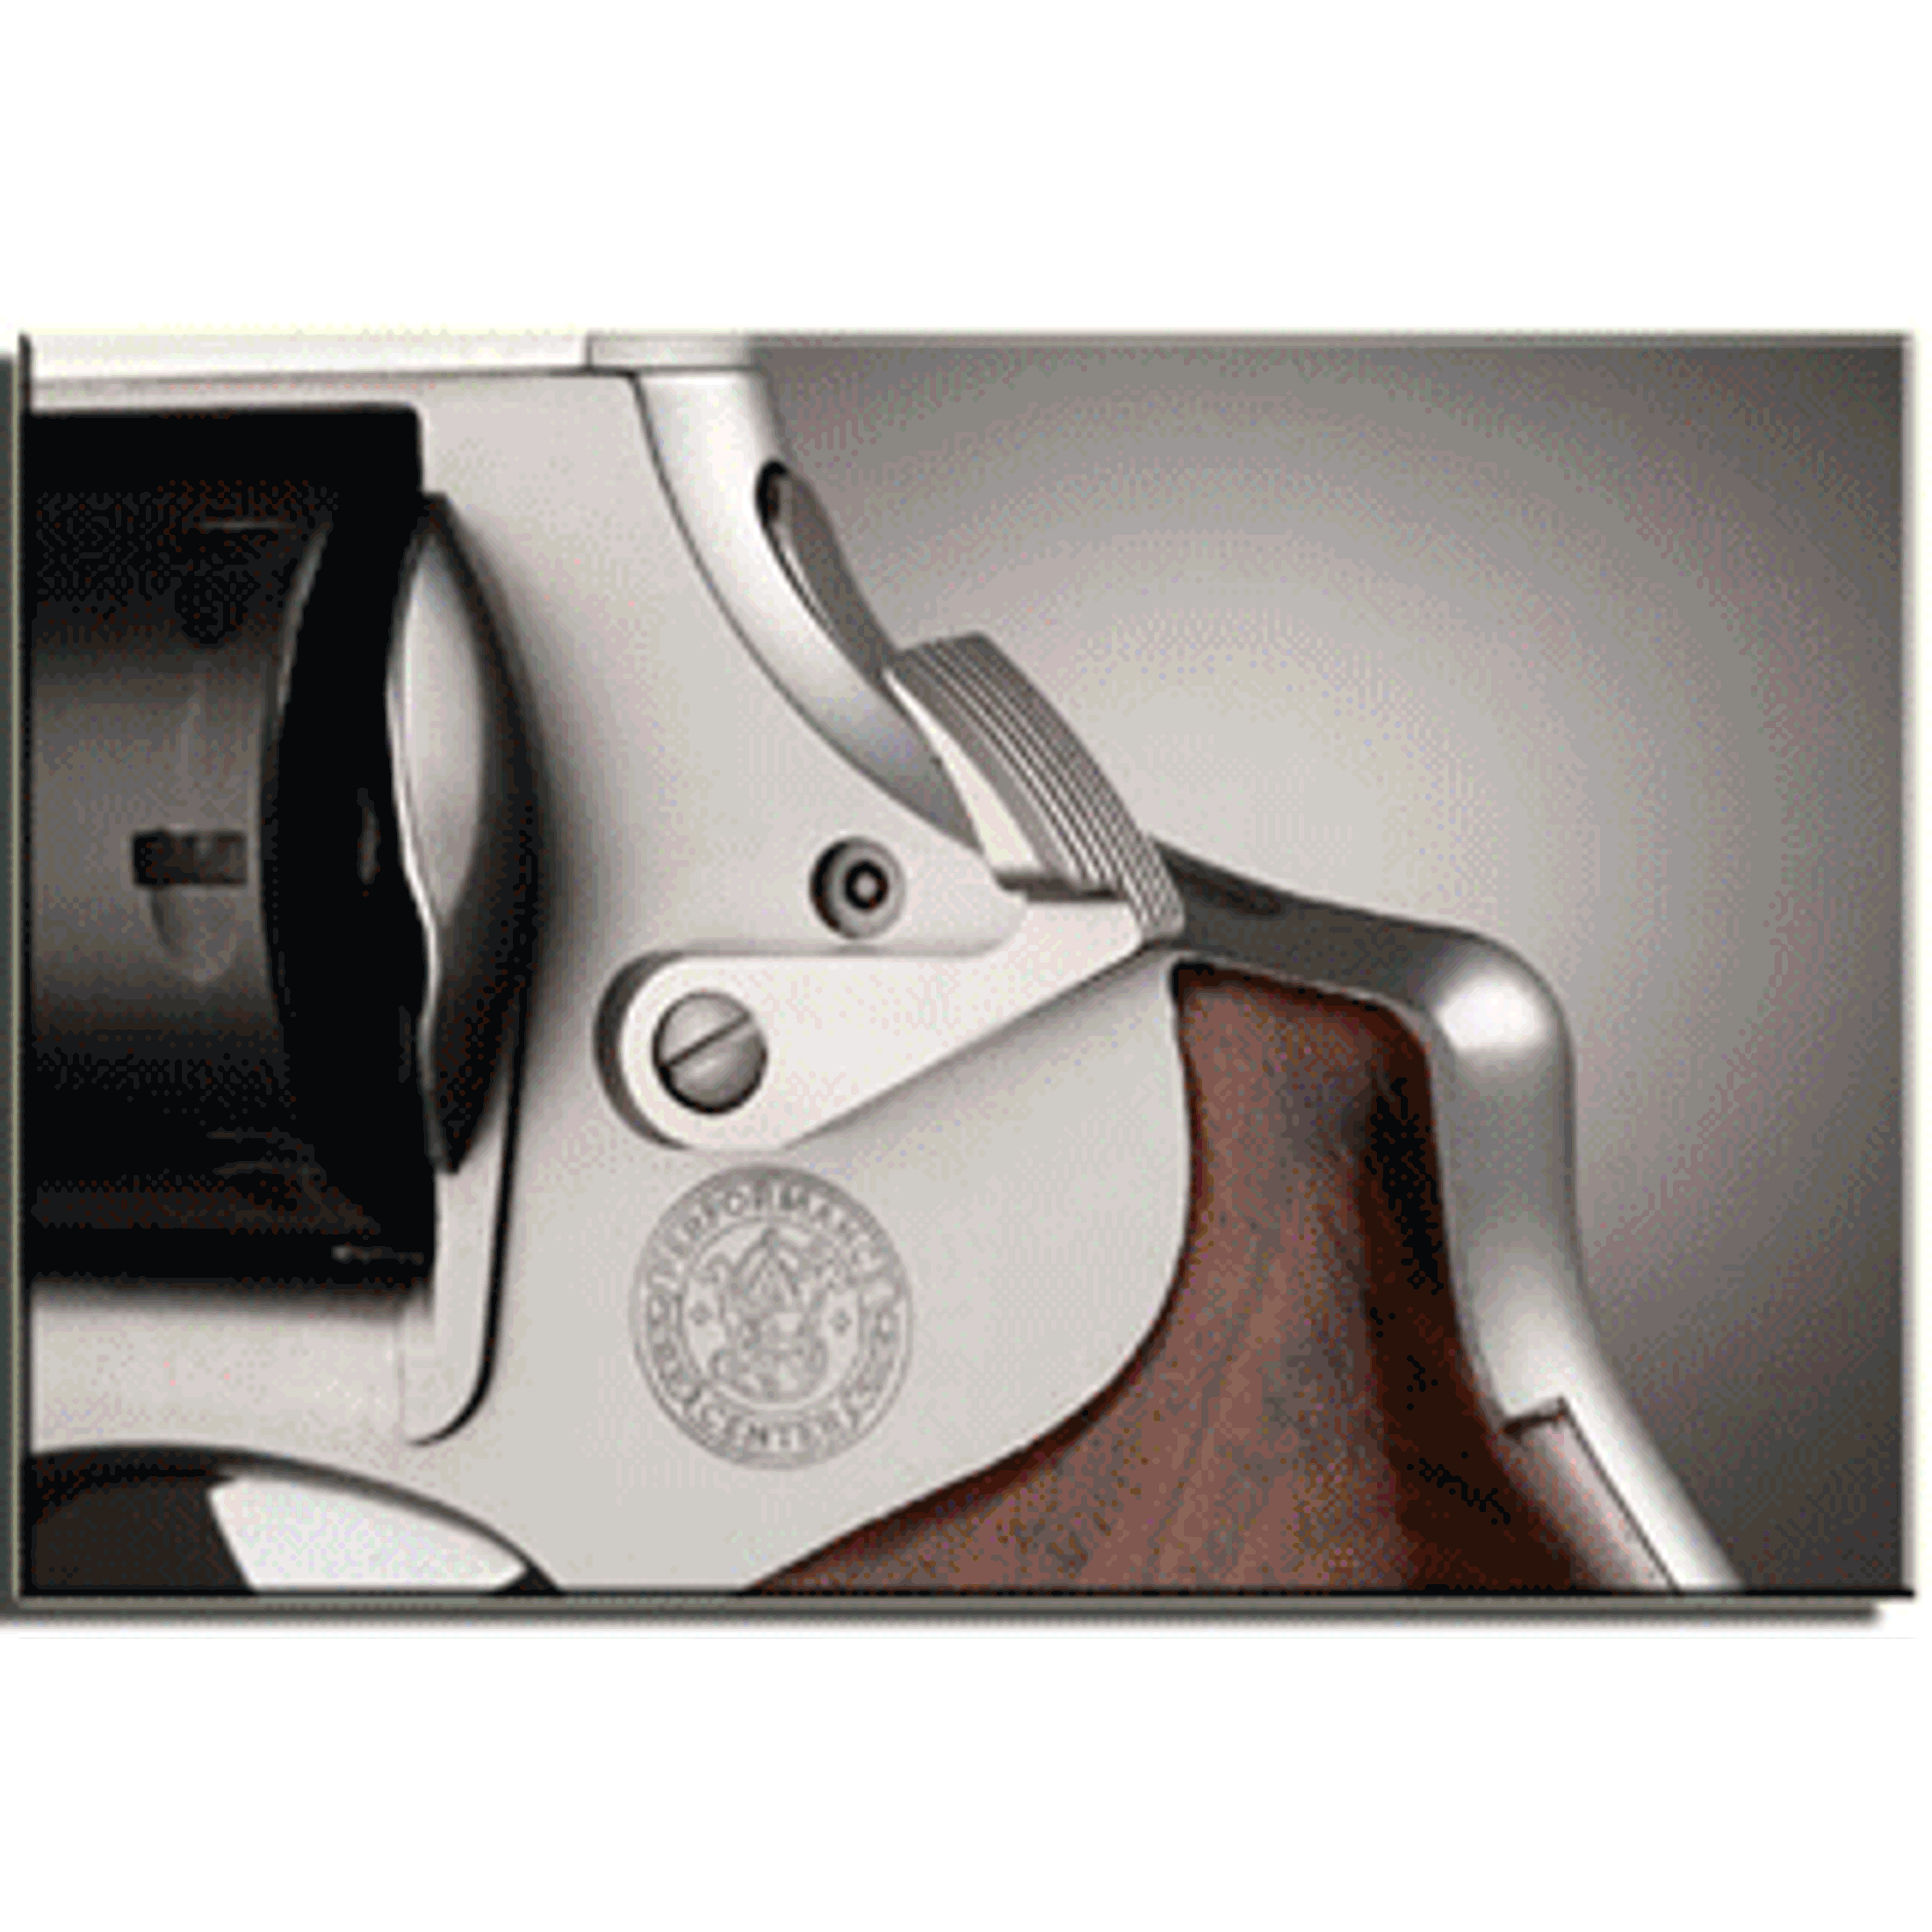 @ Smith & Wesson Tuning EXT Cylinder Release "POLIERT" Trommelschieber S&W Revolver K-L-N Rahmen 686